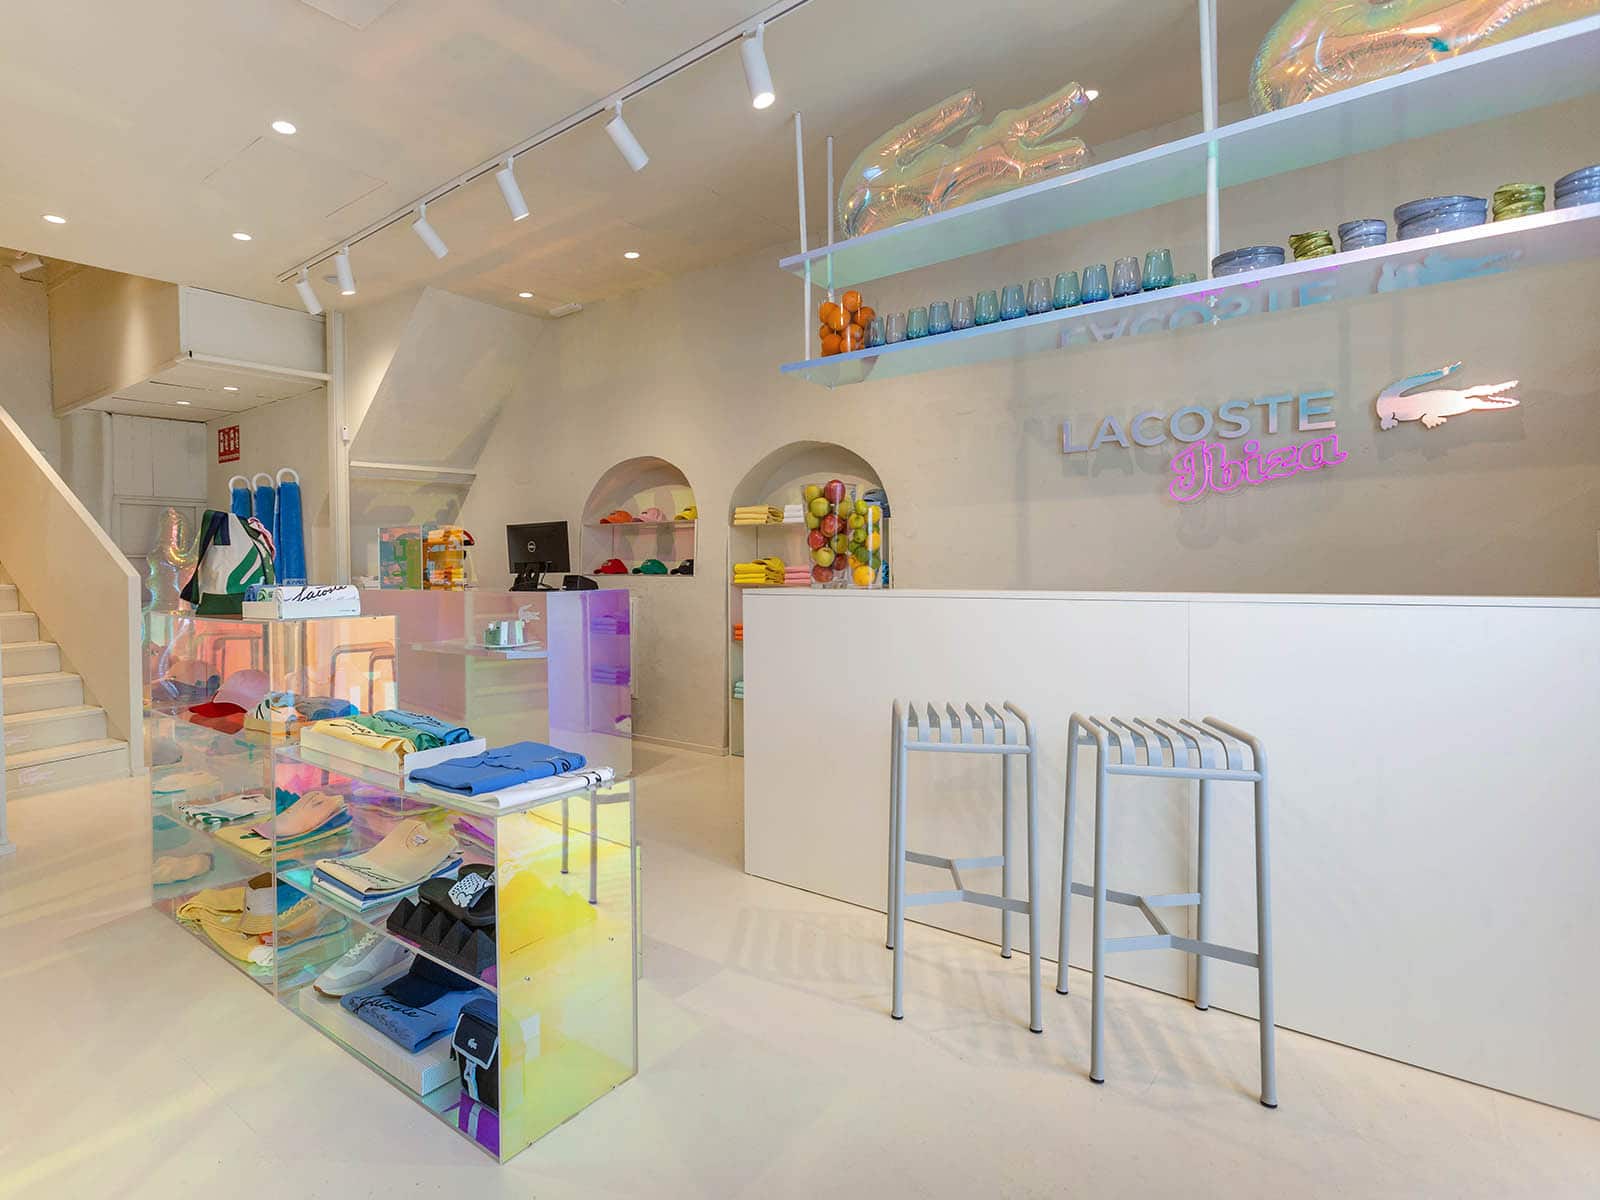 Lacoste lands in Ibiza with a unique pop-up shop